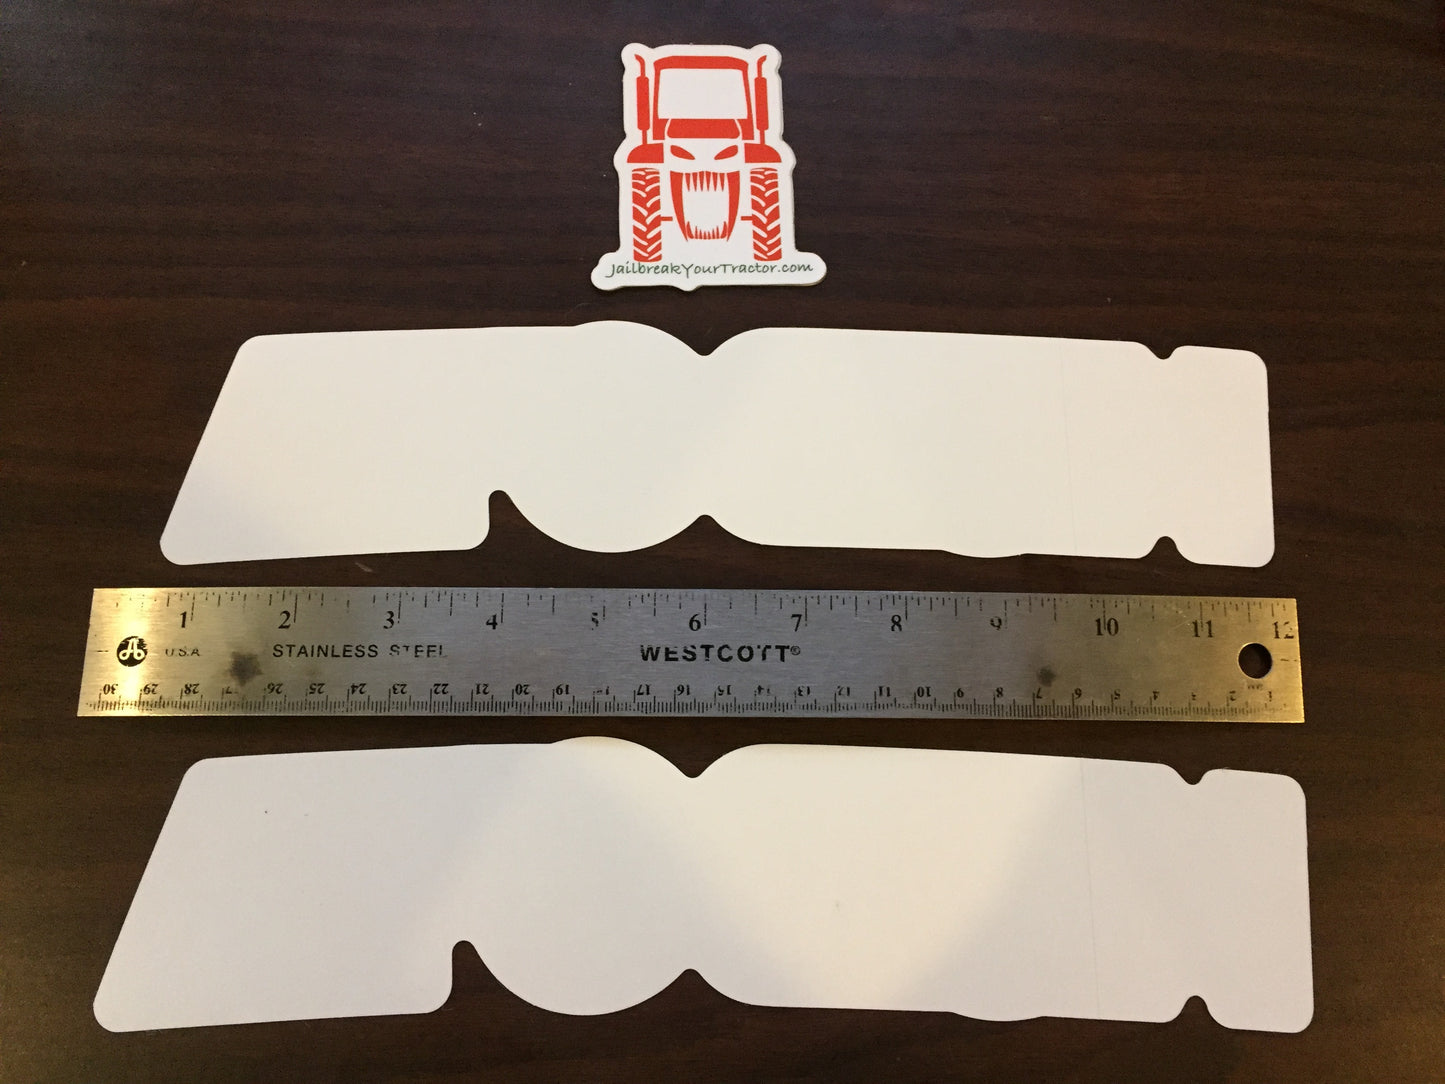 2x LG OEM Genuine Kubota Tractor BX B L Kit Tractor Decals Sticker Set UV proof with applicator